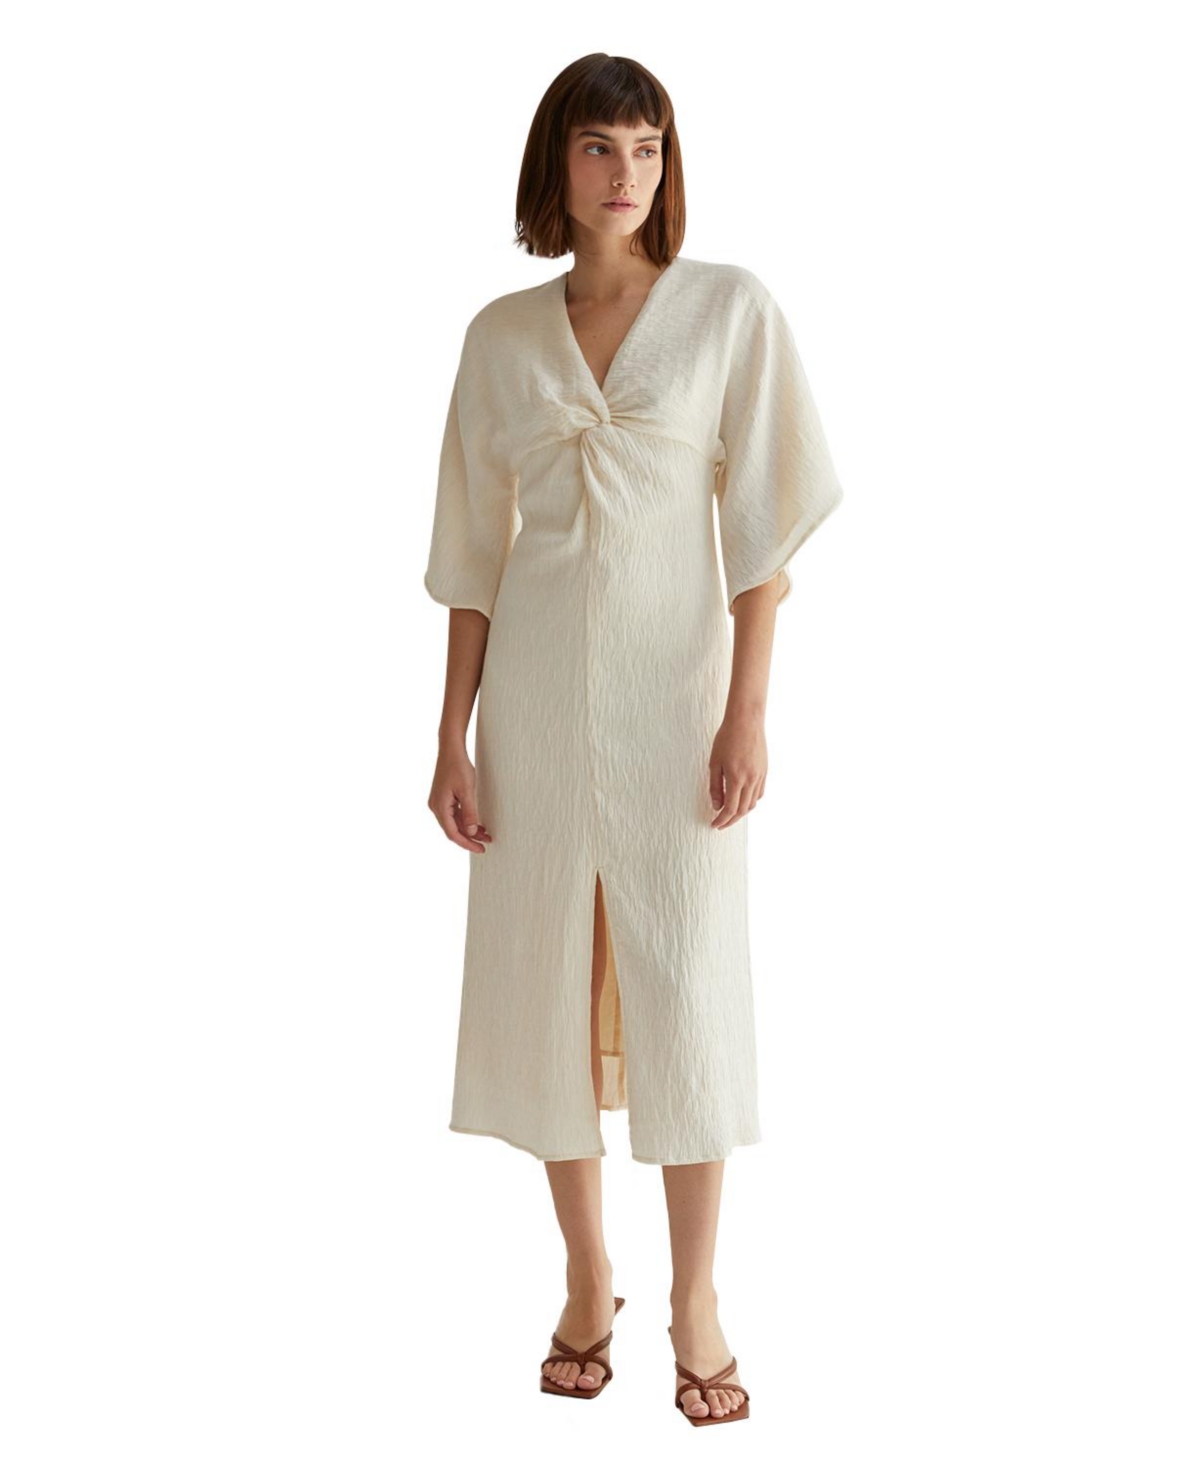 Women's Adelia Textured Woven Dress - Open white + cream